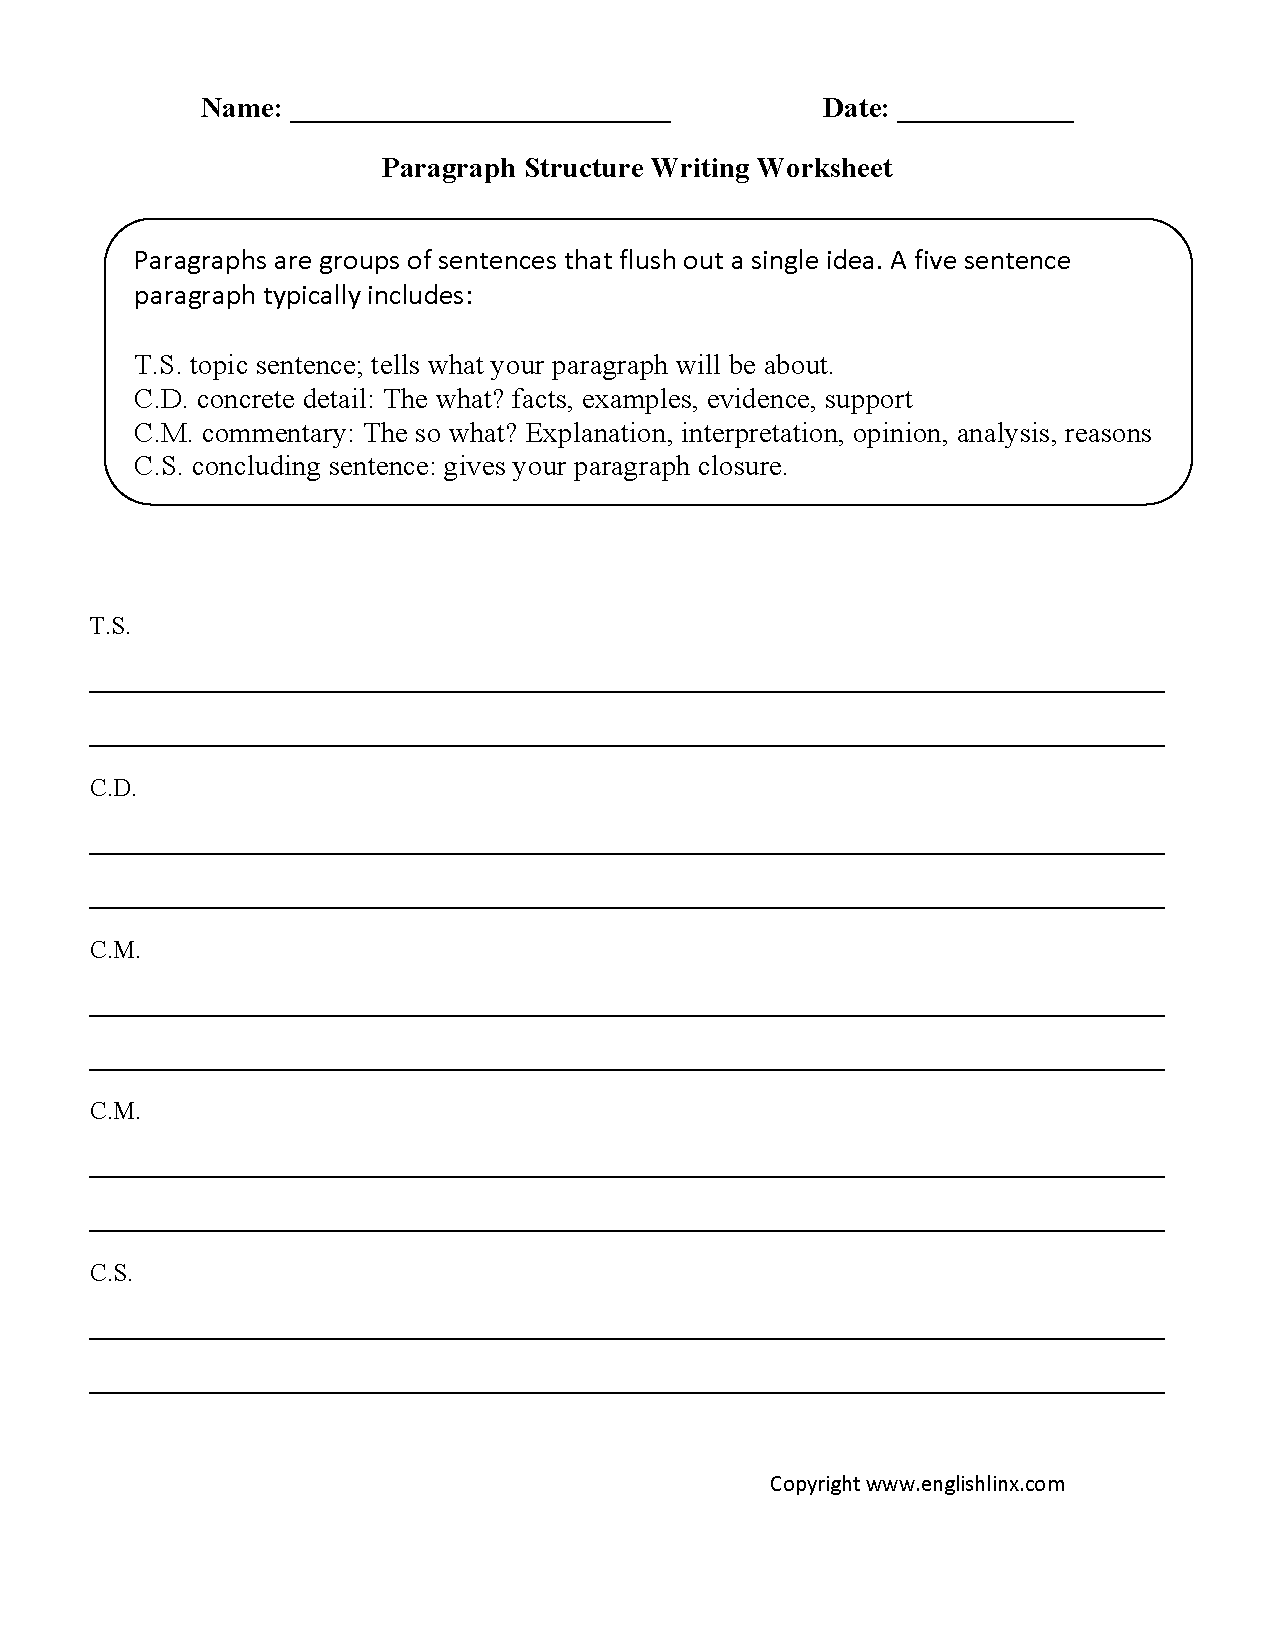 Free Printable Paragraph Writing Worksheets - Printable Templates